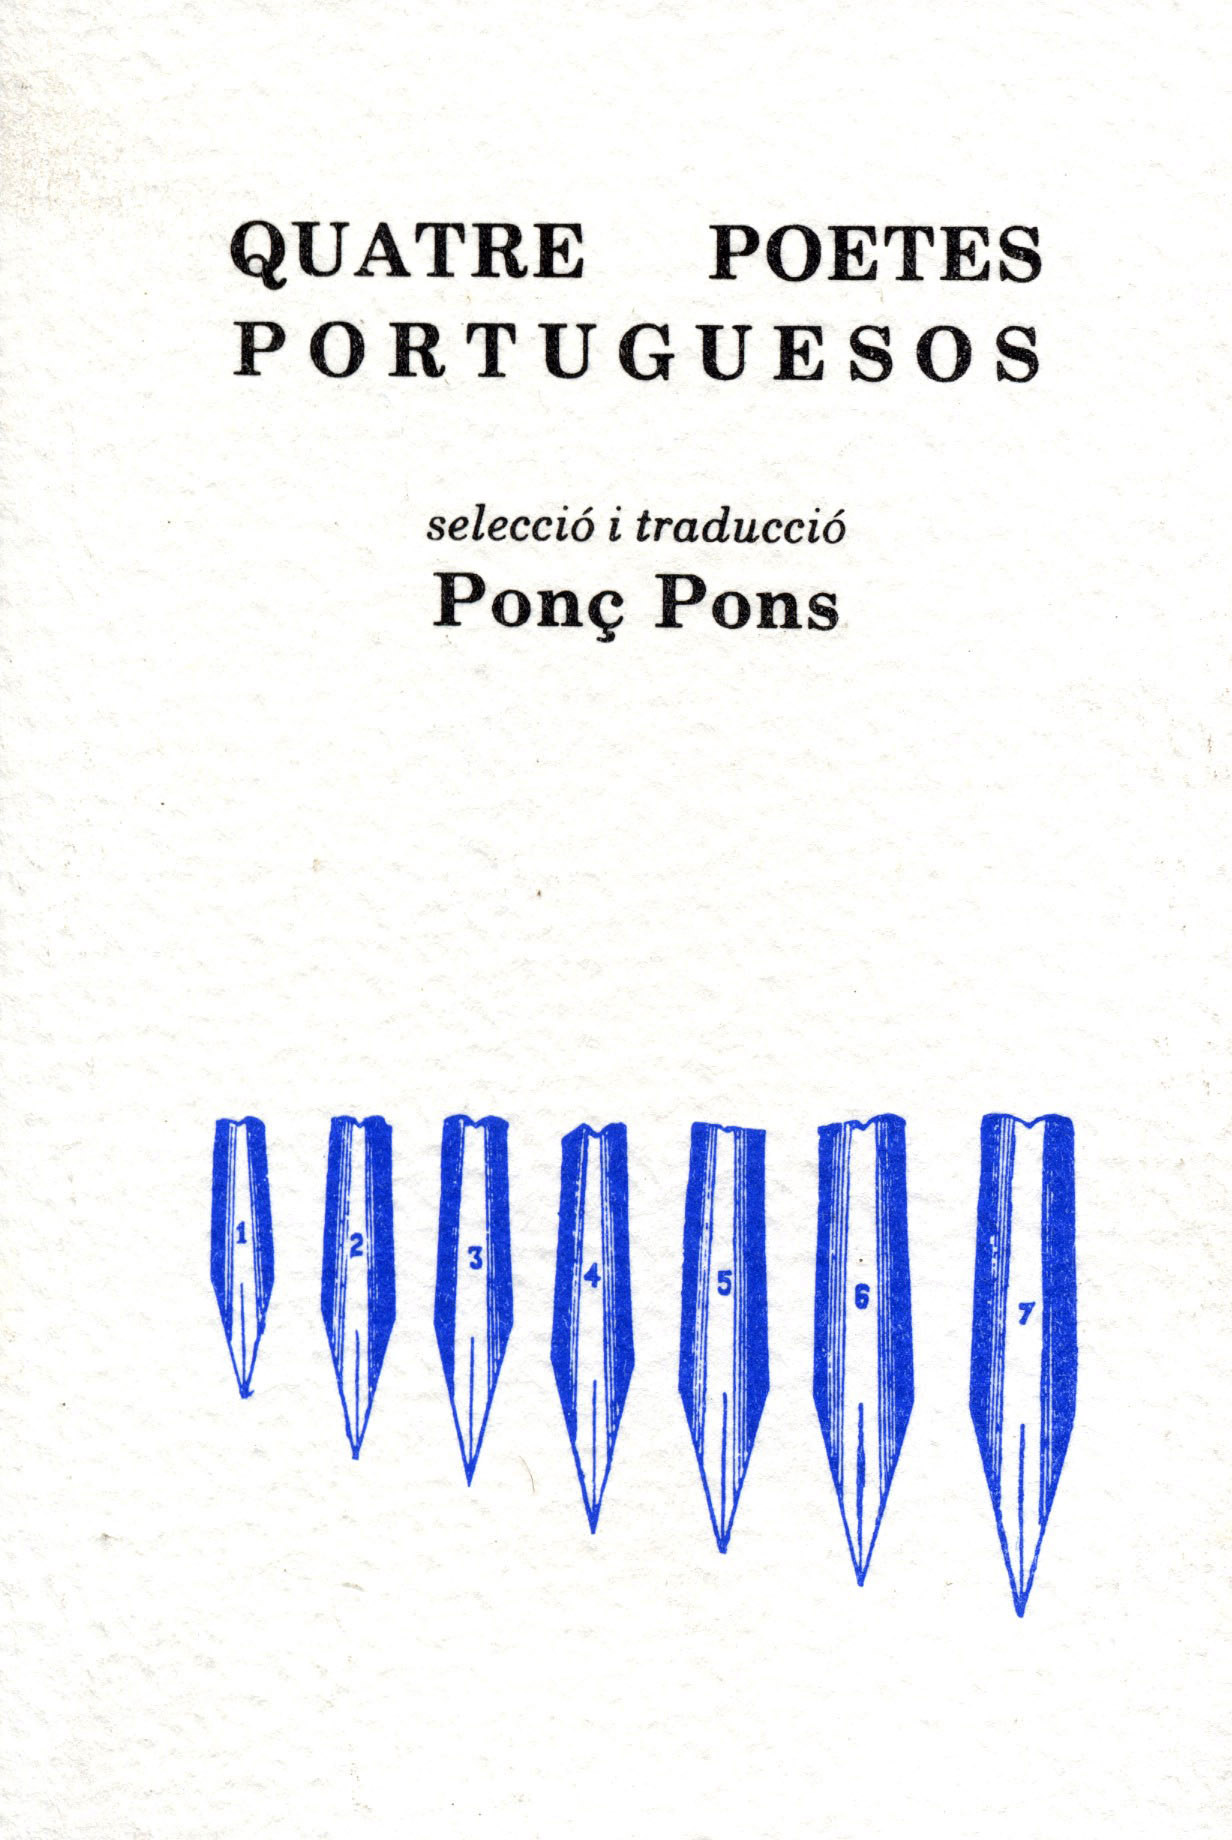 Quatre poetes portuguesos